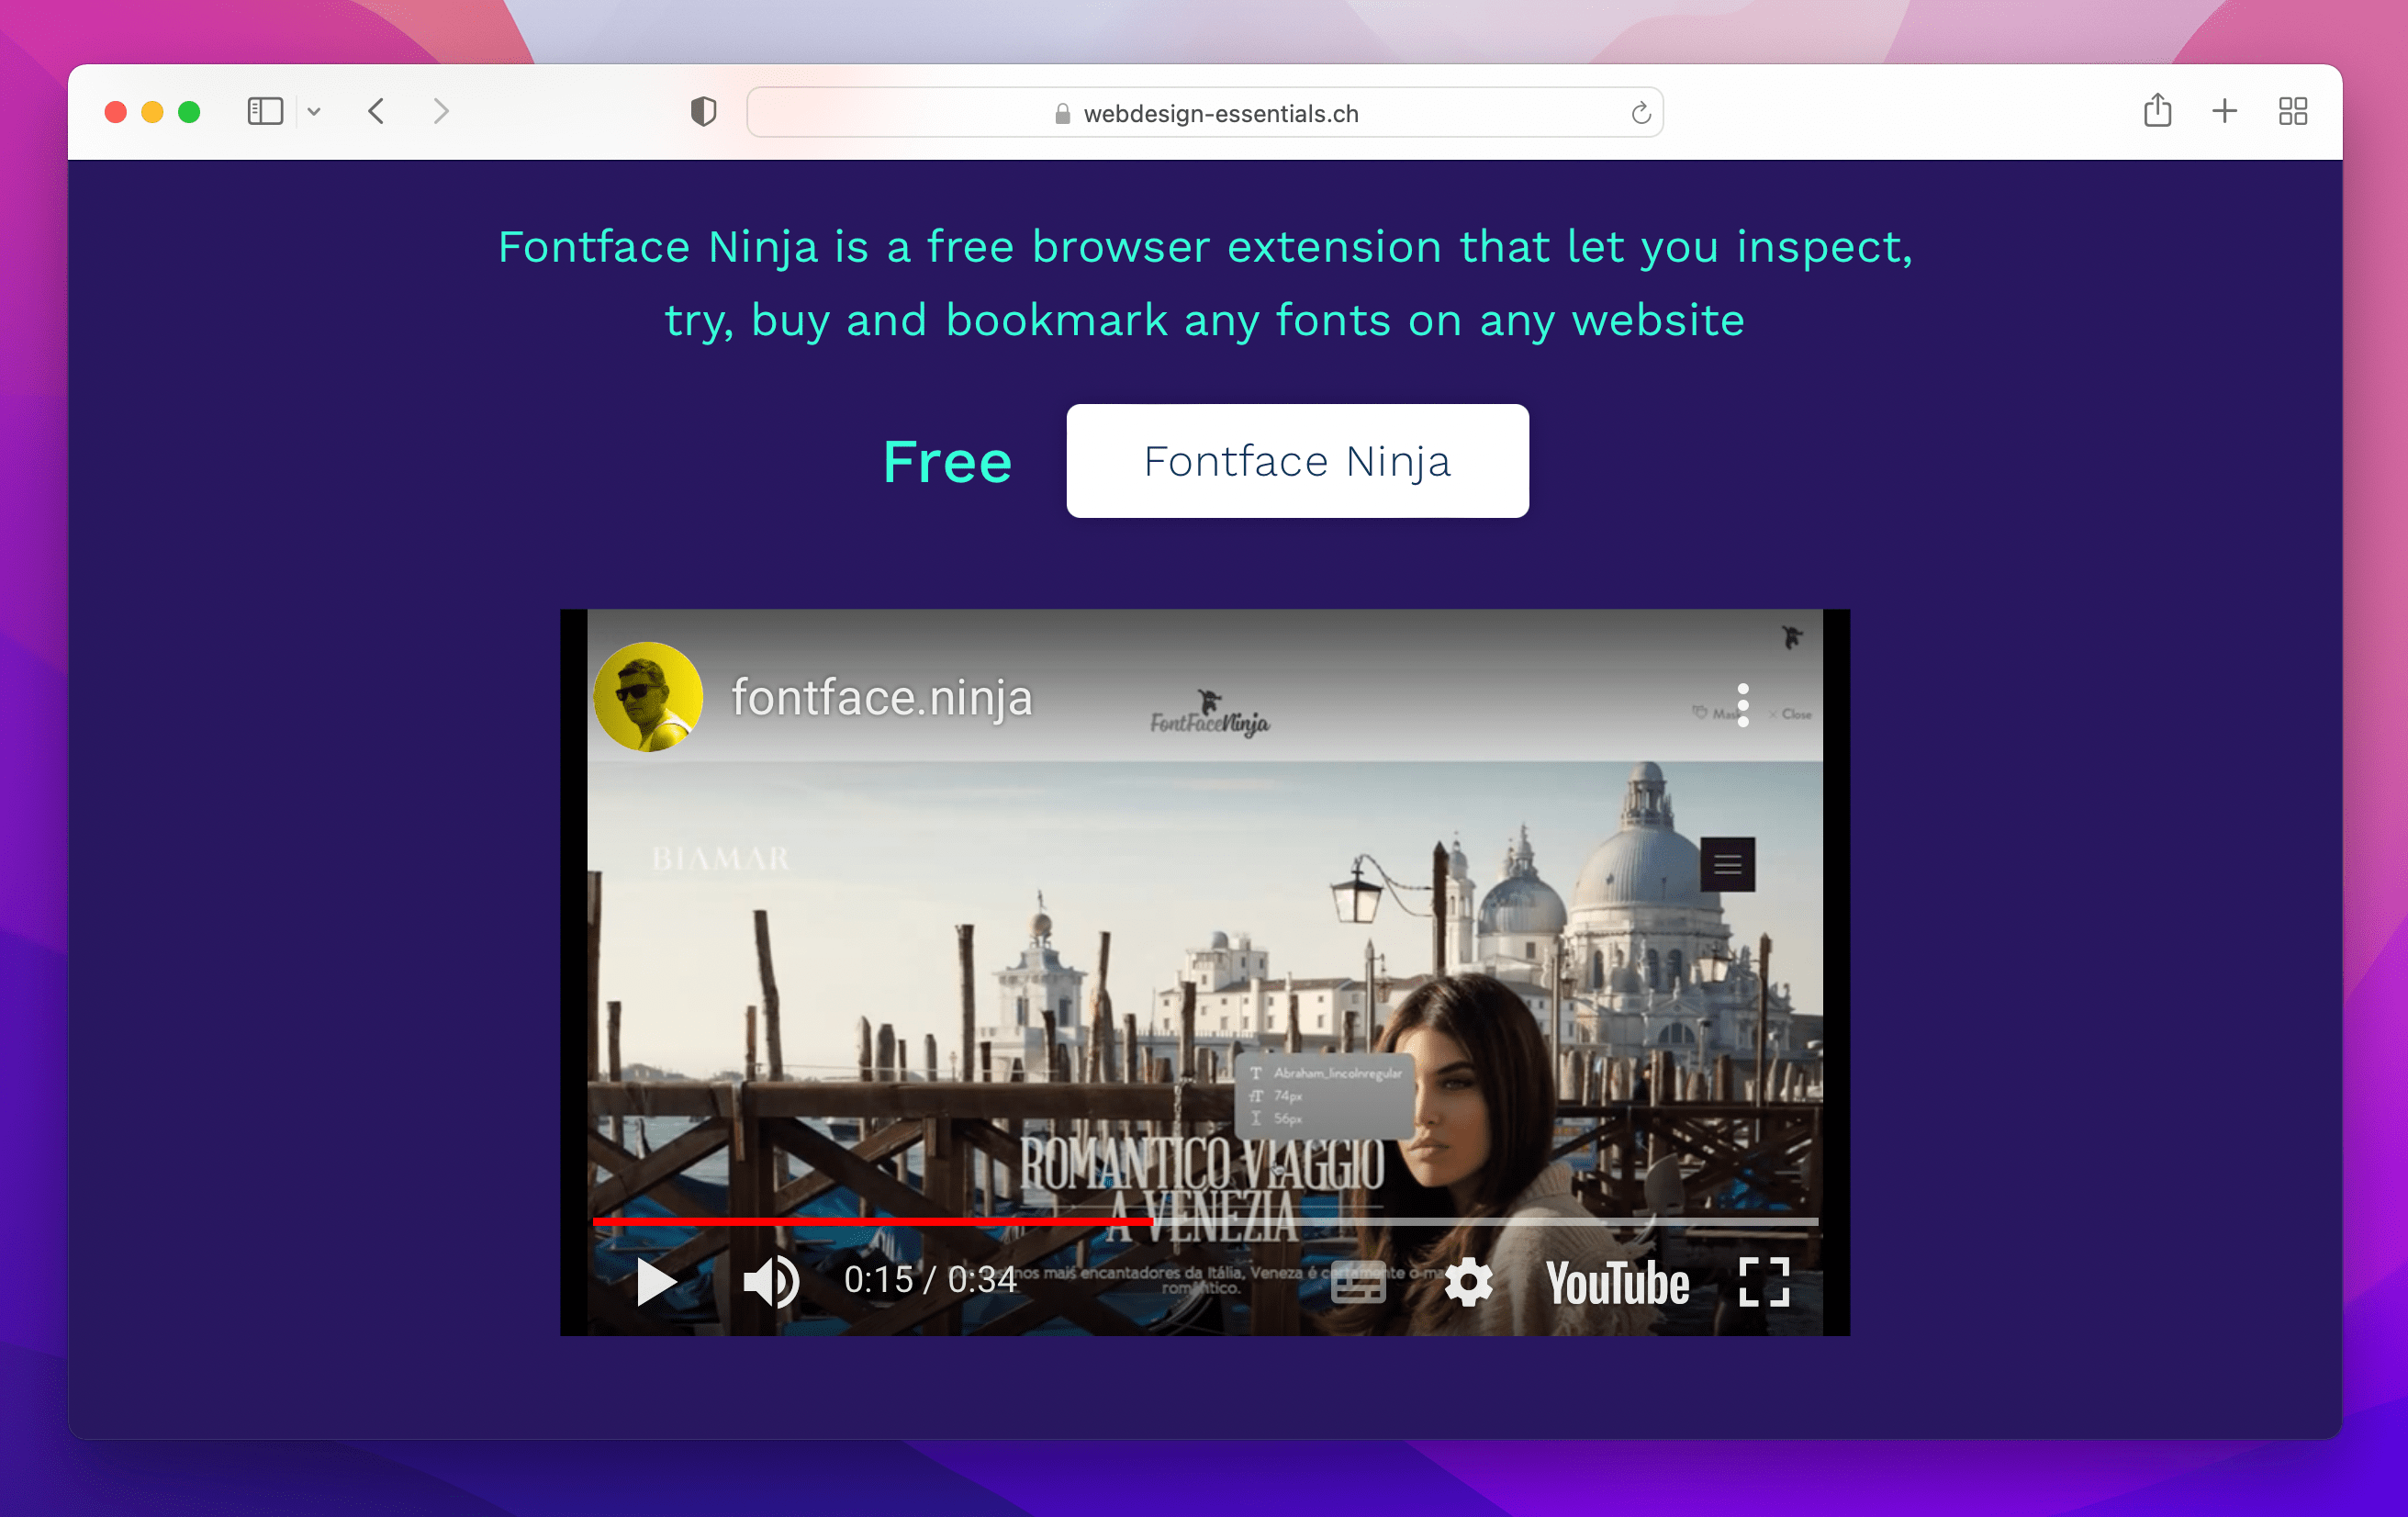 homepage of FontFace Ninja website